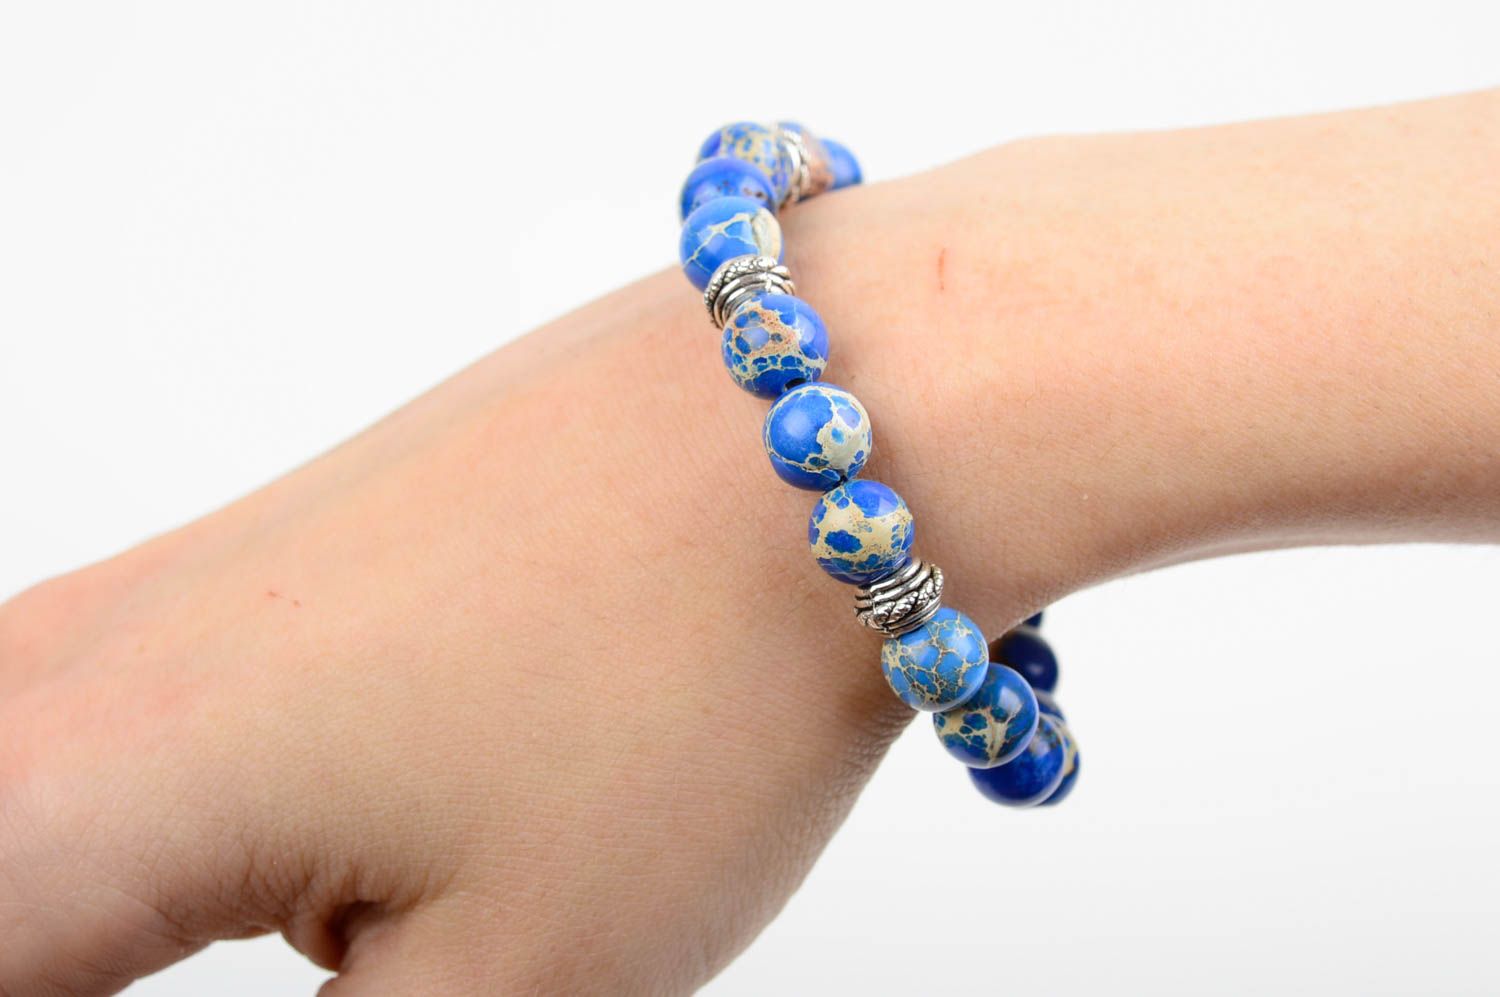 Unusual female bracelet handmade wrist accessory jewelry made of natural stones photo 5